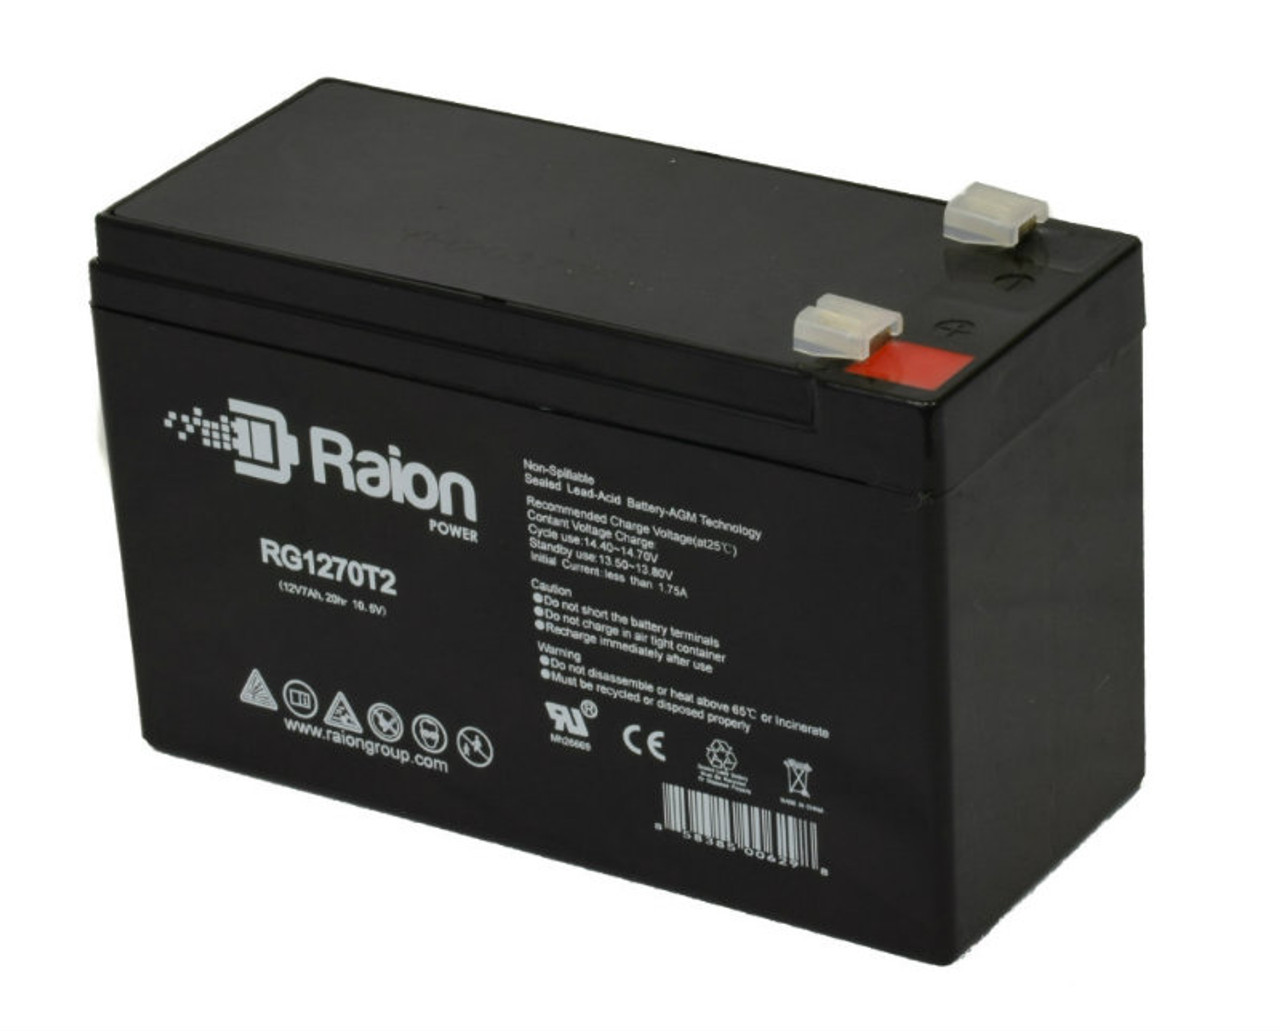 Raion Power RG1270T2 12V 7Ah Rechargeable Battery for Stannah Model 250 Straight Stairlift